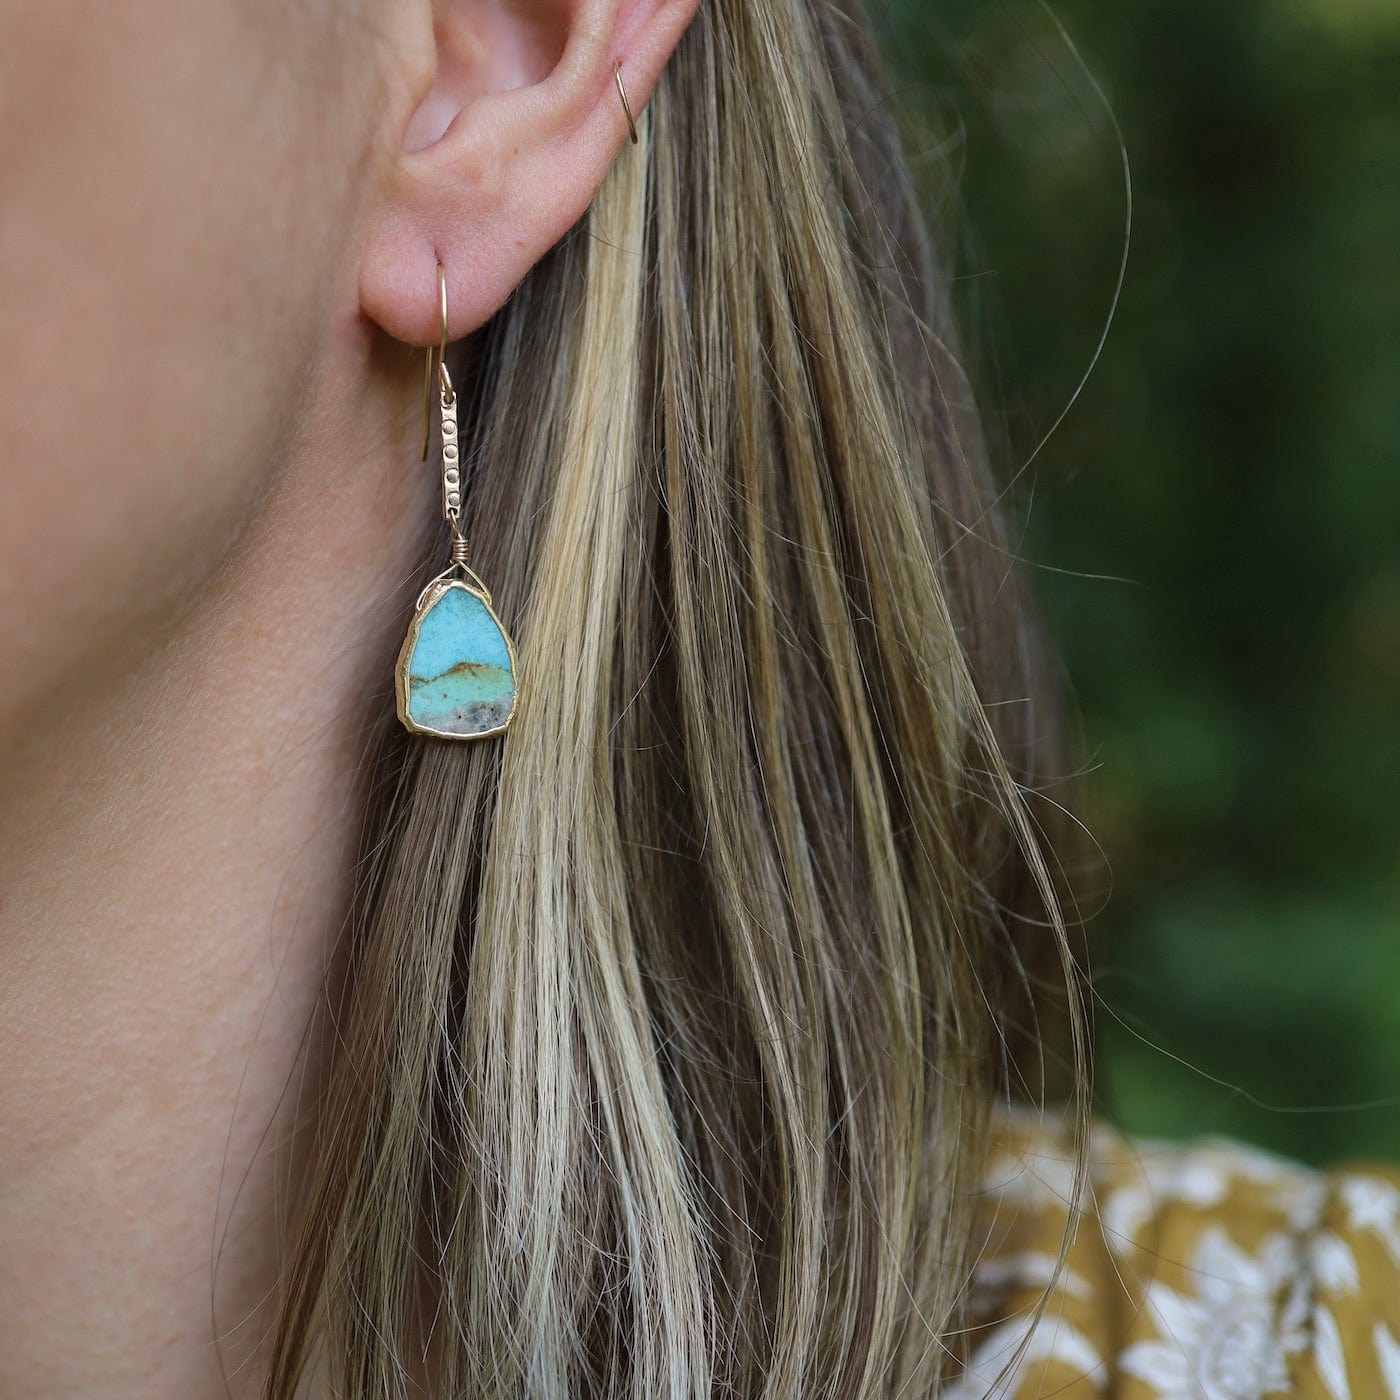 EAR-GF Bar with Turquoise Slice Earrings